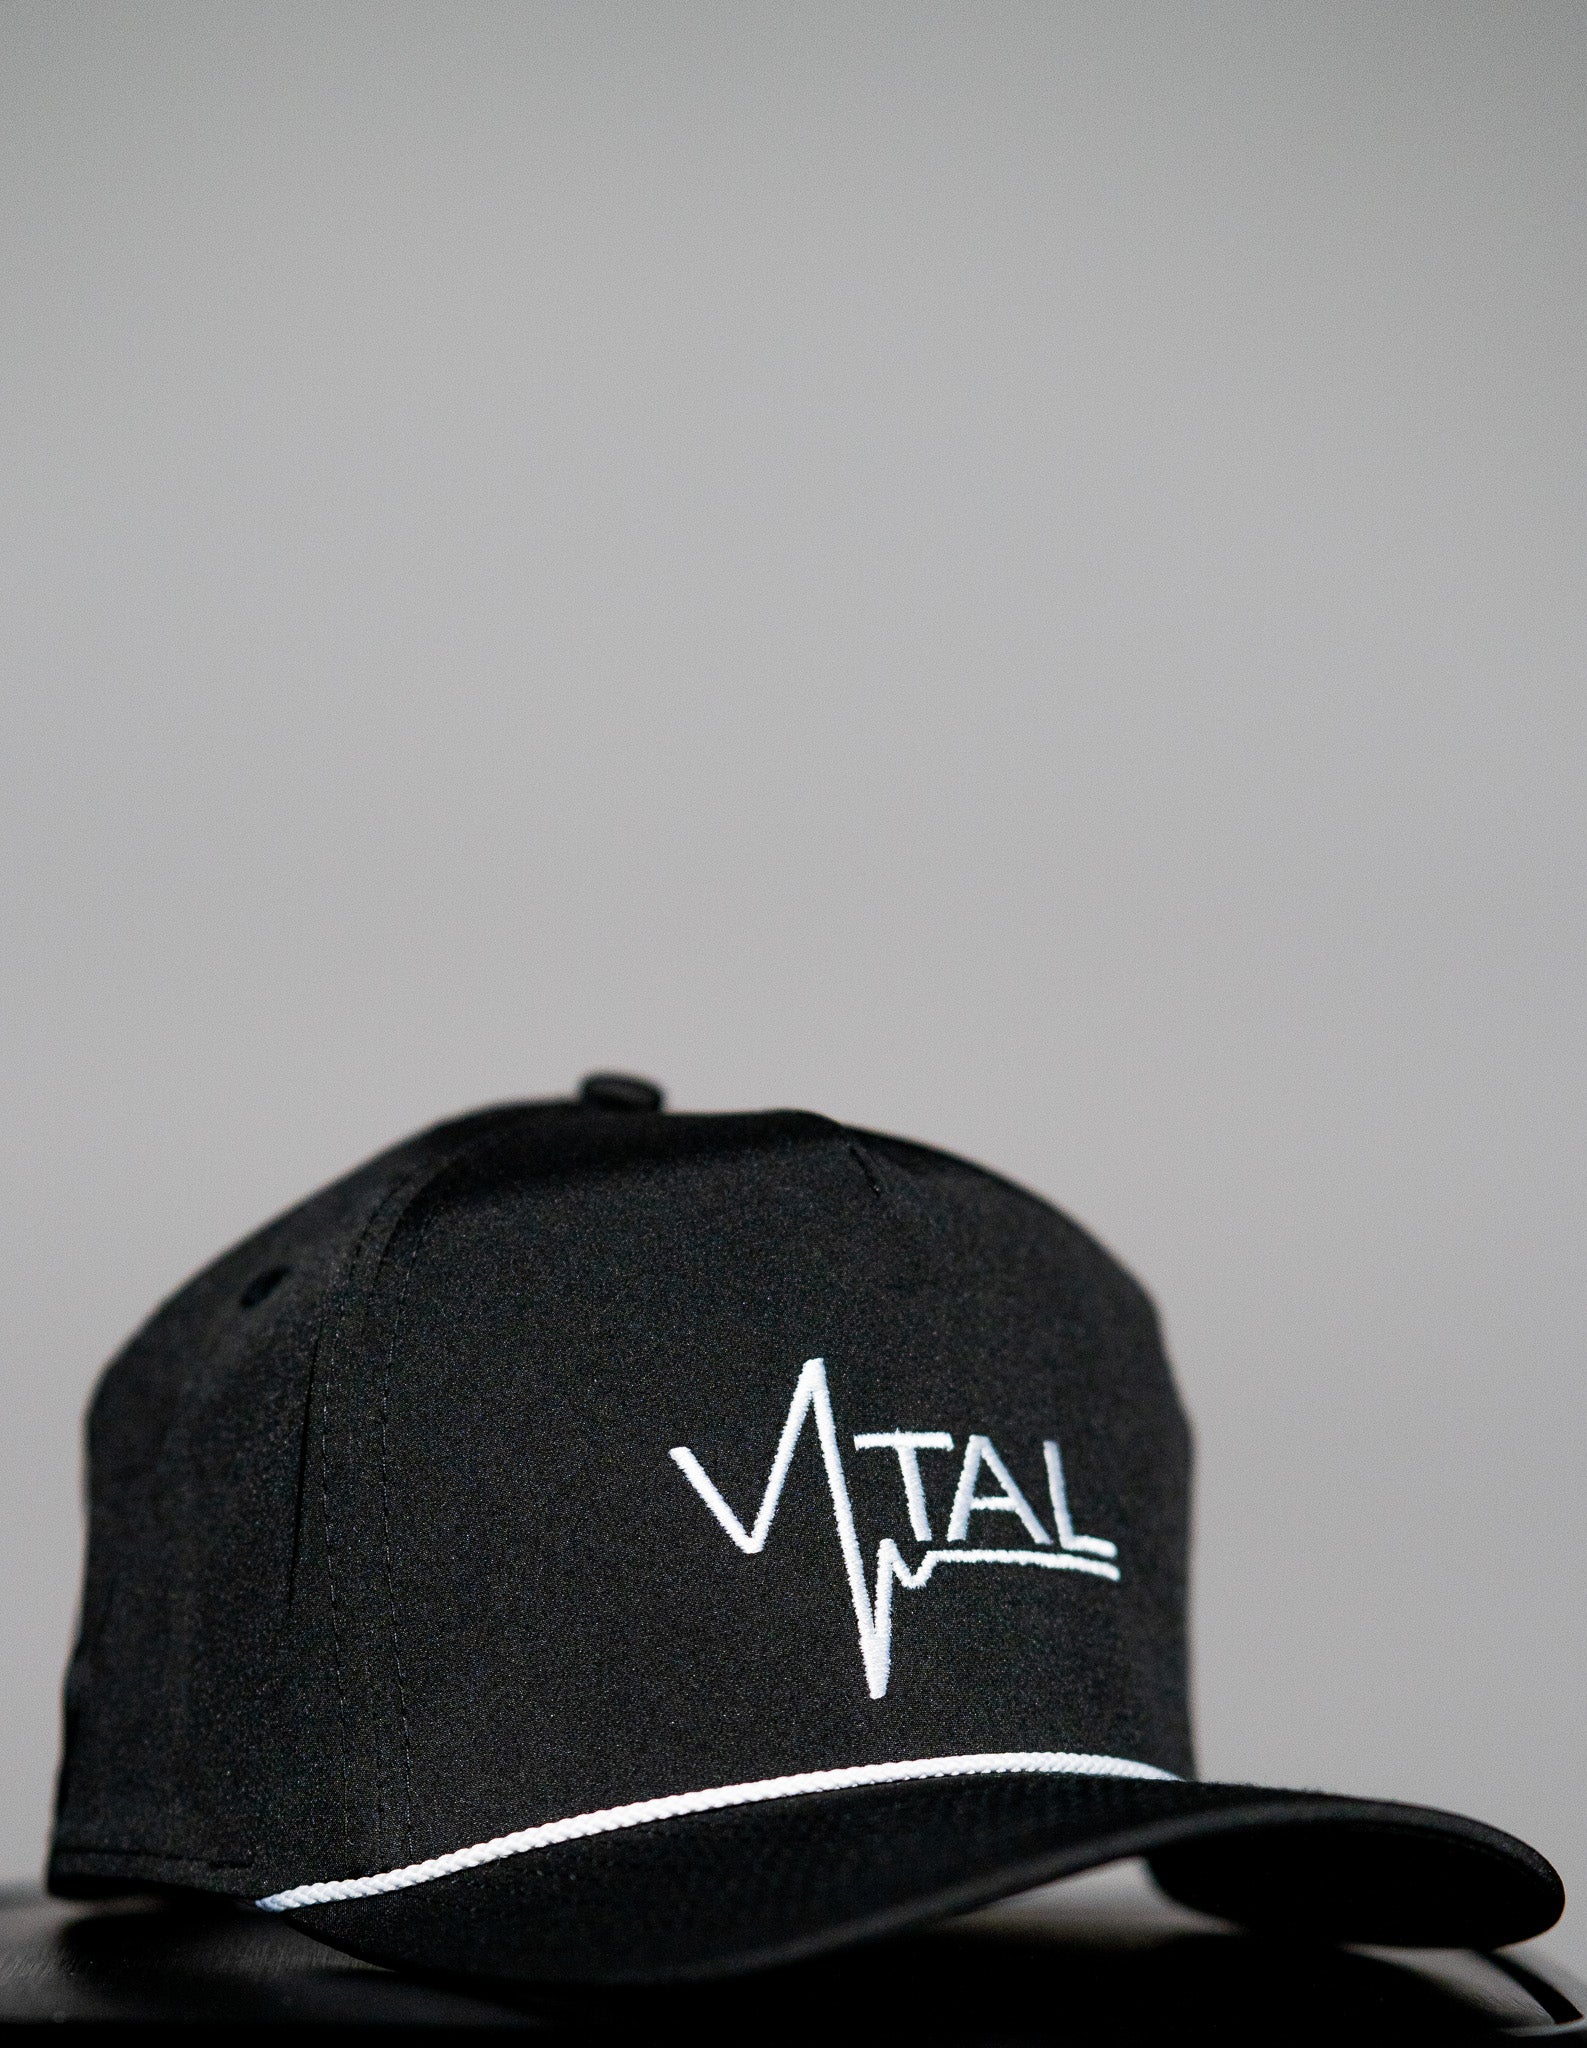 A Frame Snapback Hat - Black - VITAL APPAREL